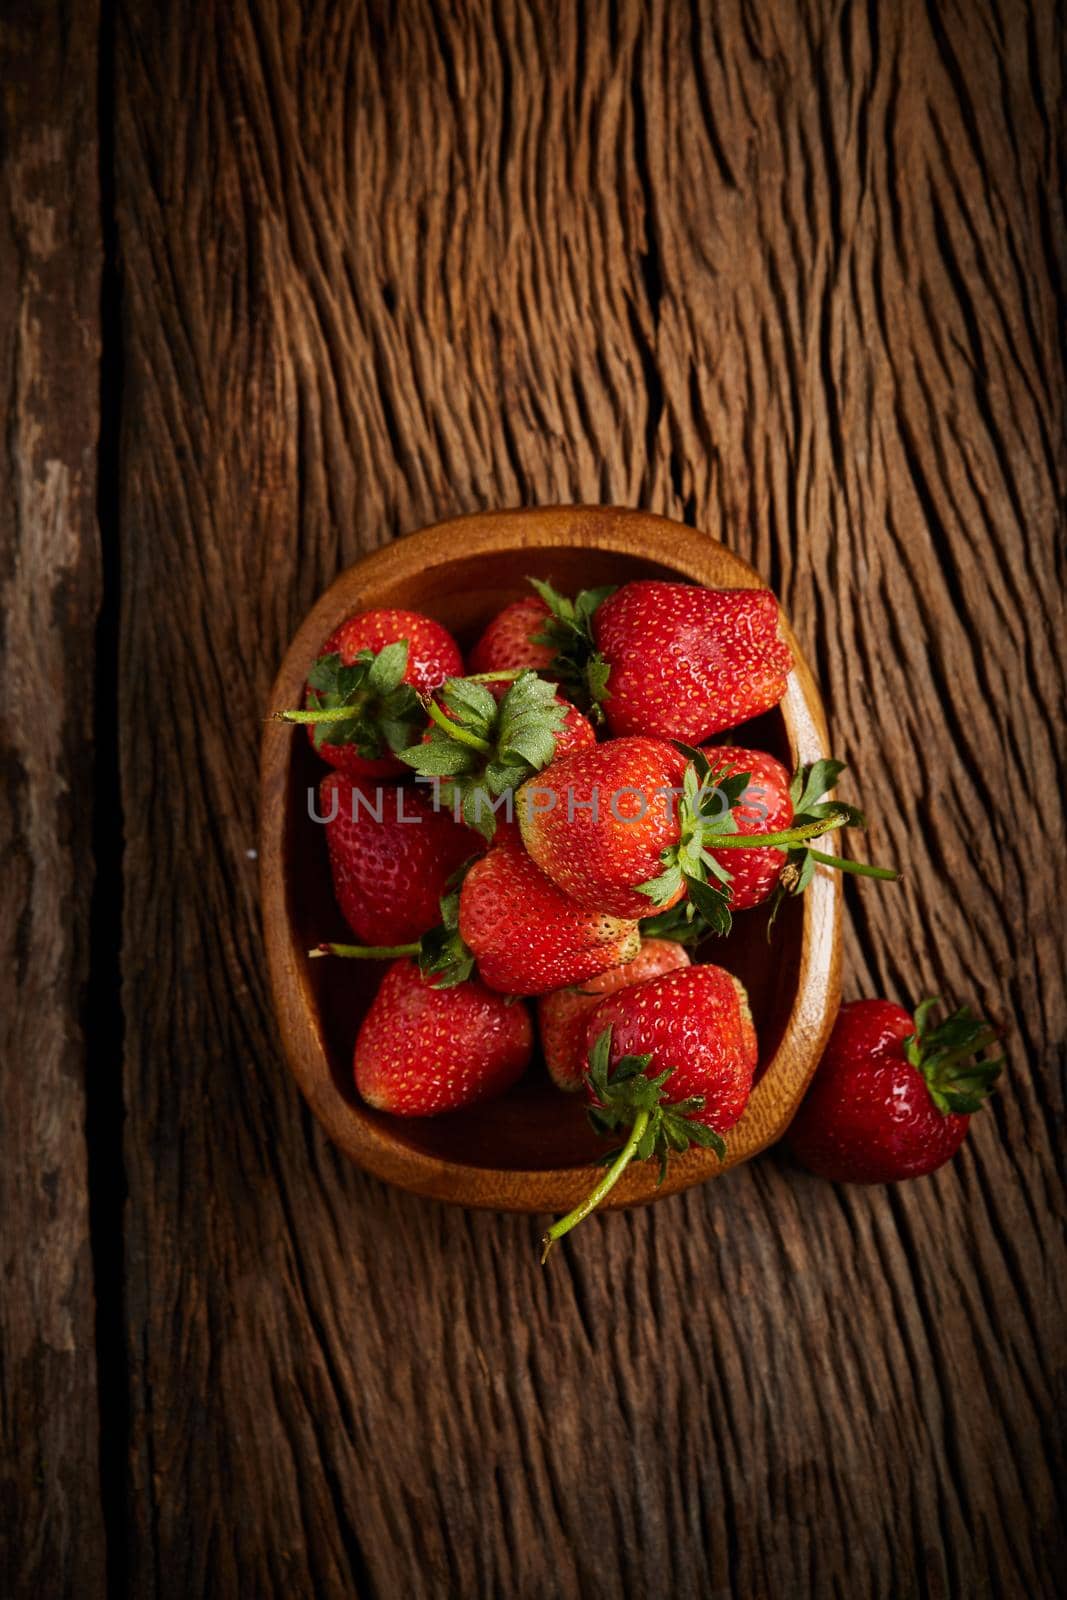 Strawberries on wood. Top view